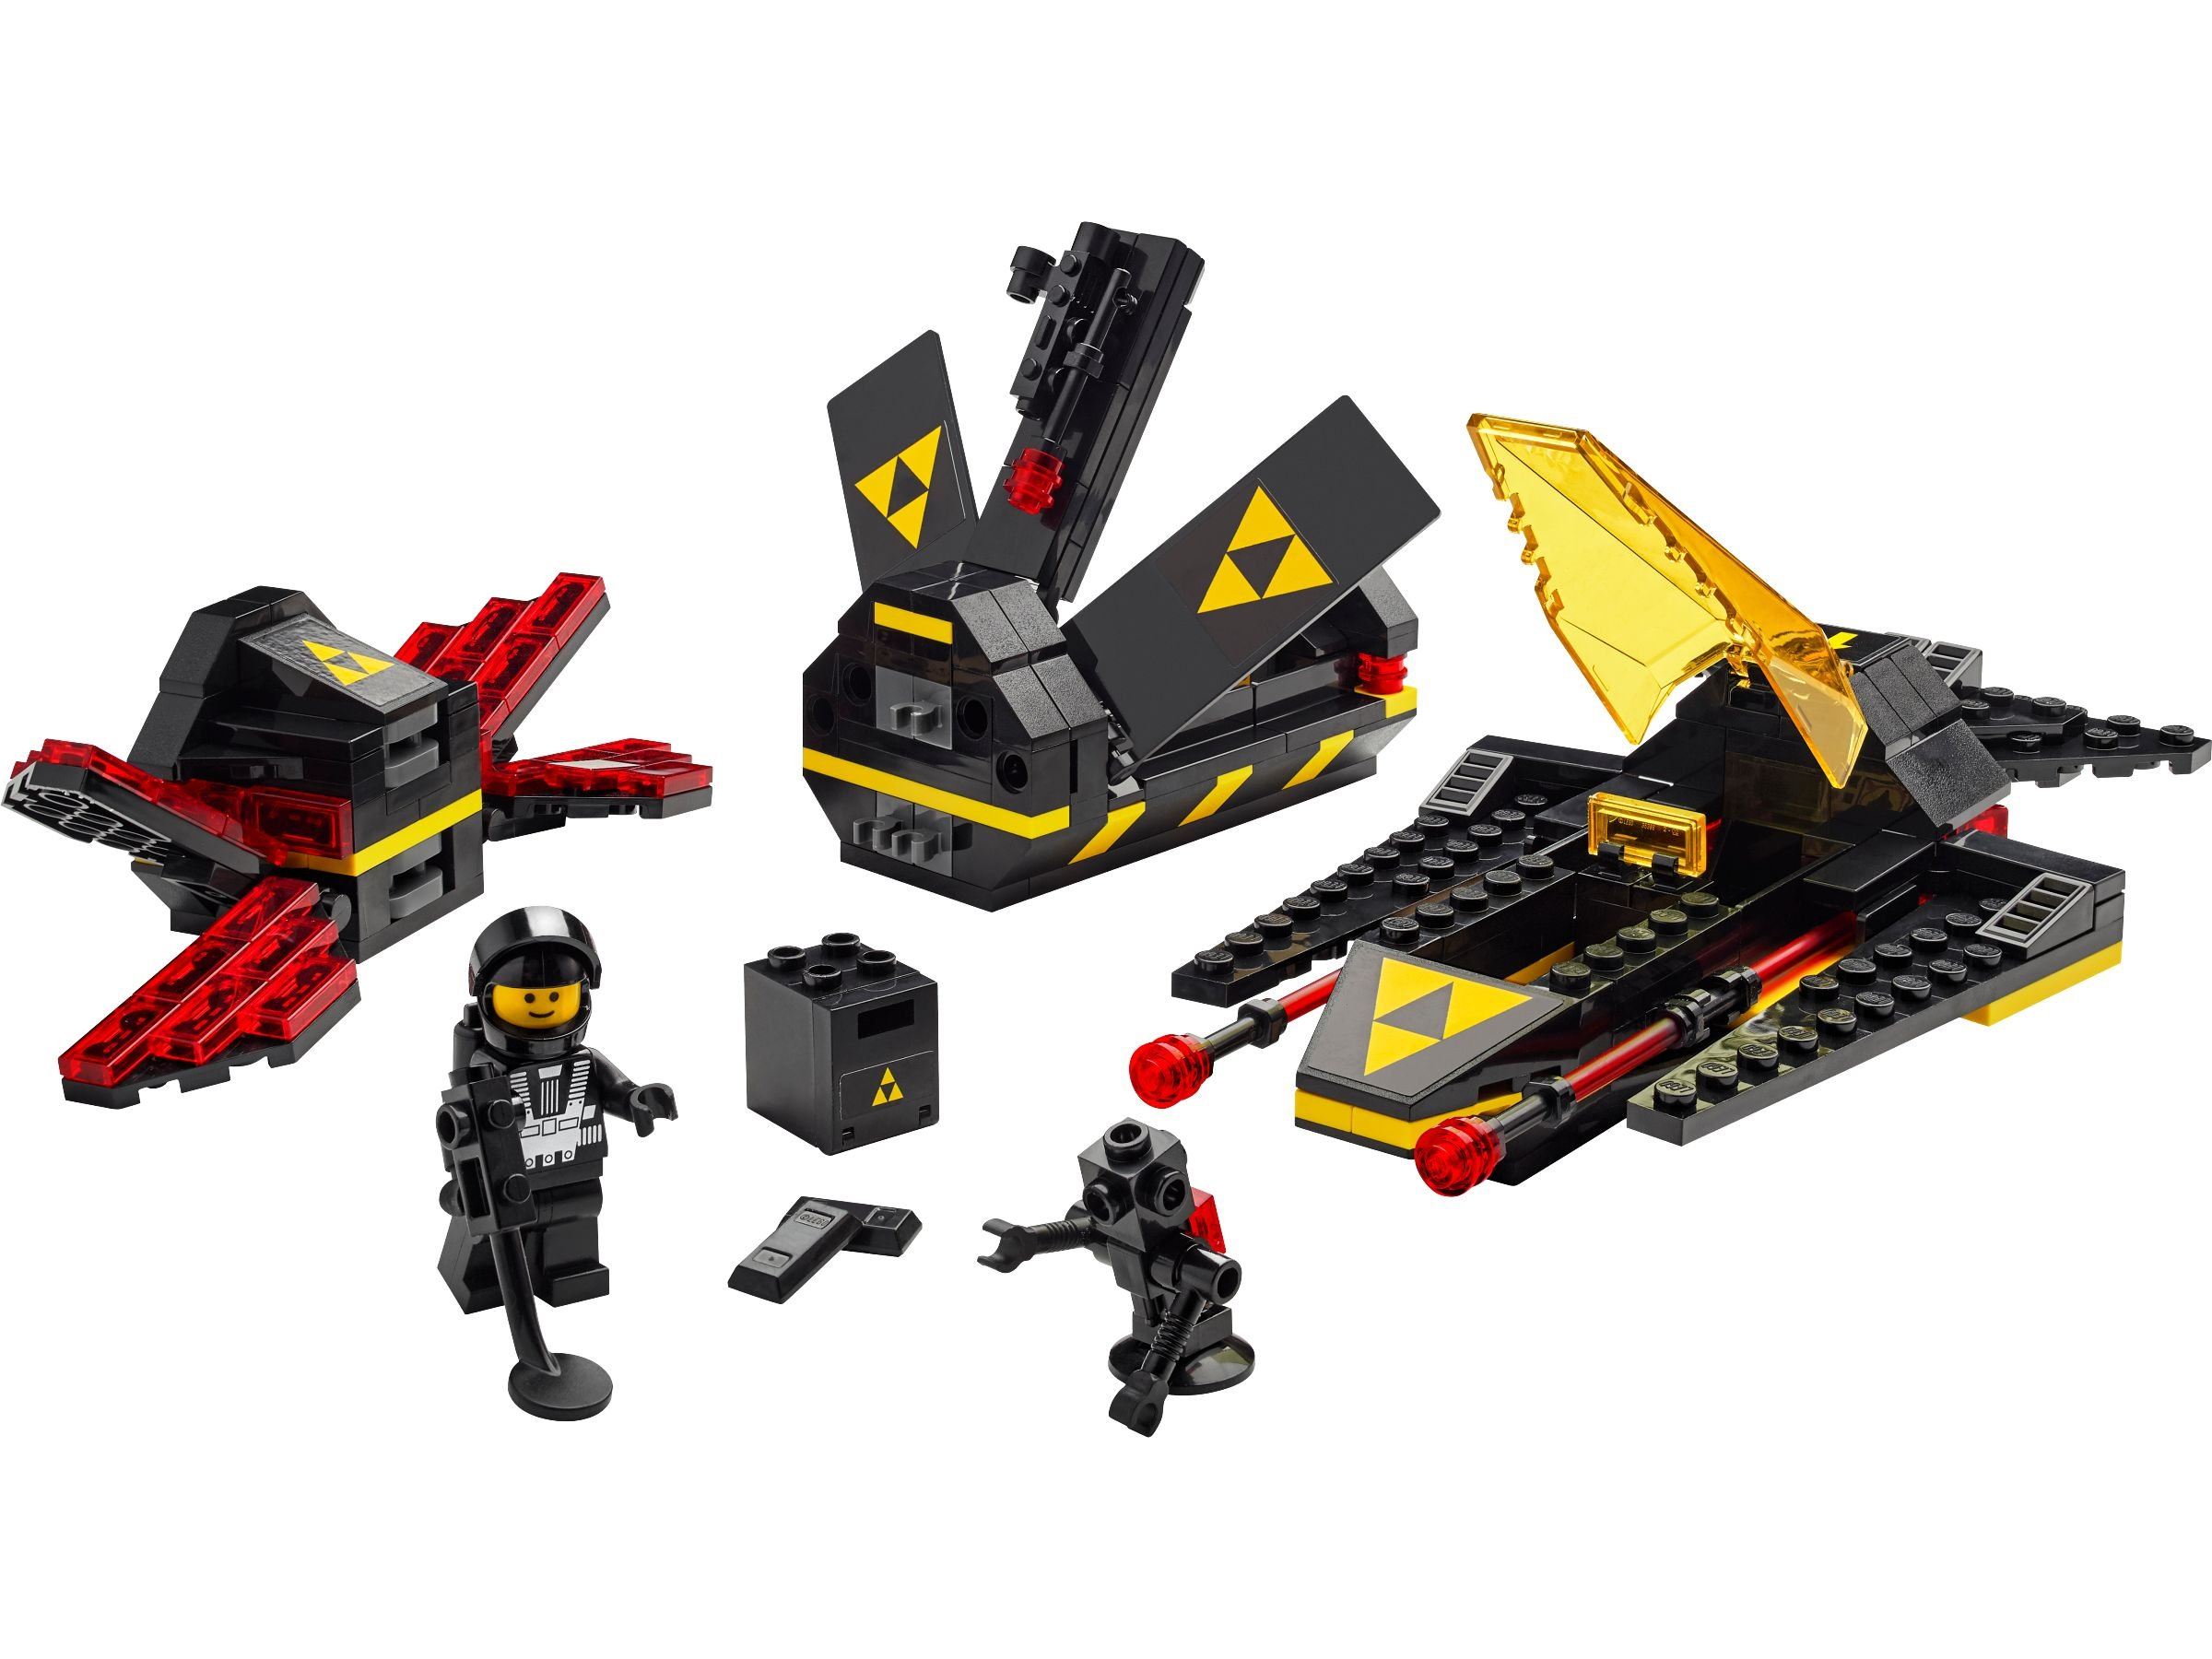 Blacktron-Raumschiff Promotional 40580 Bausatz LEGO